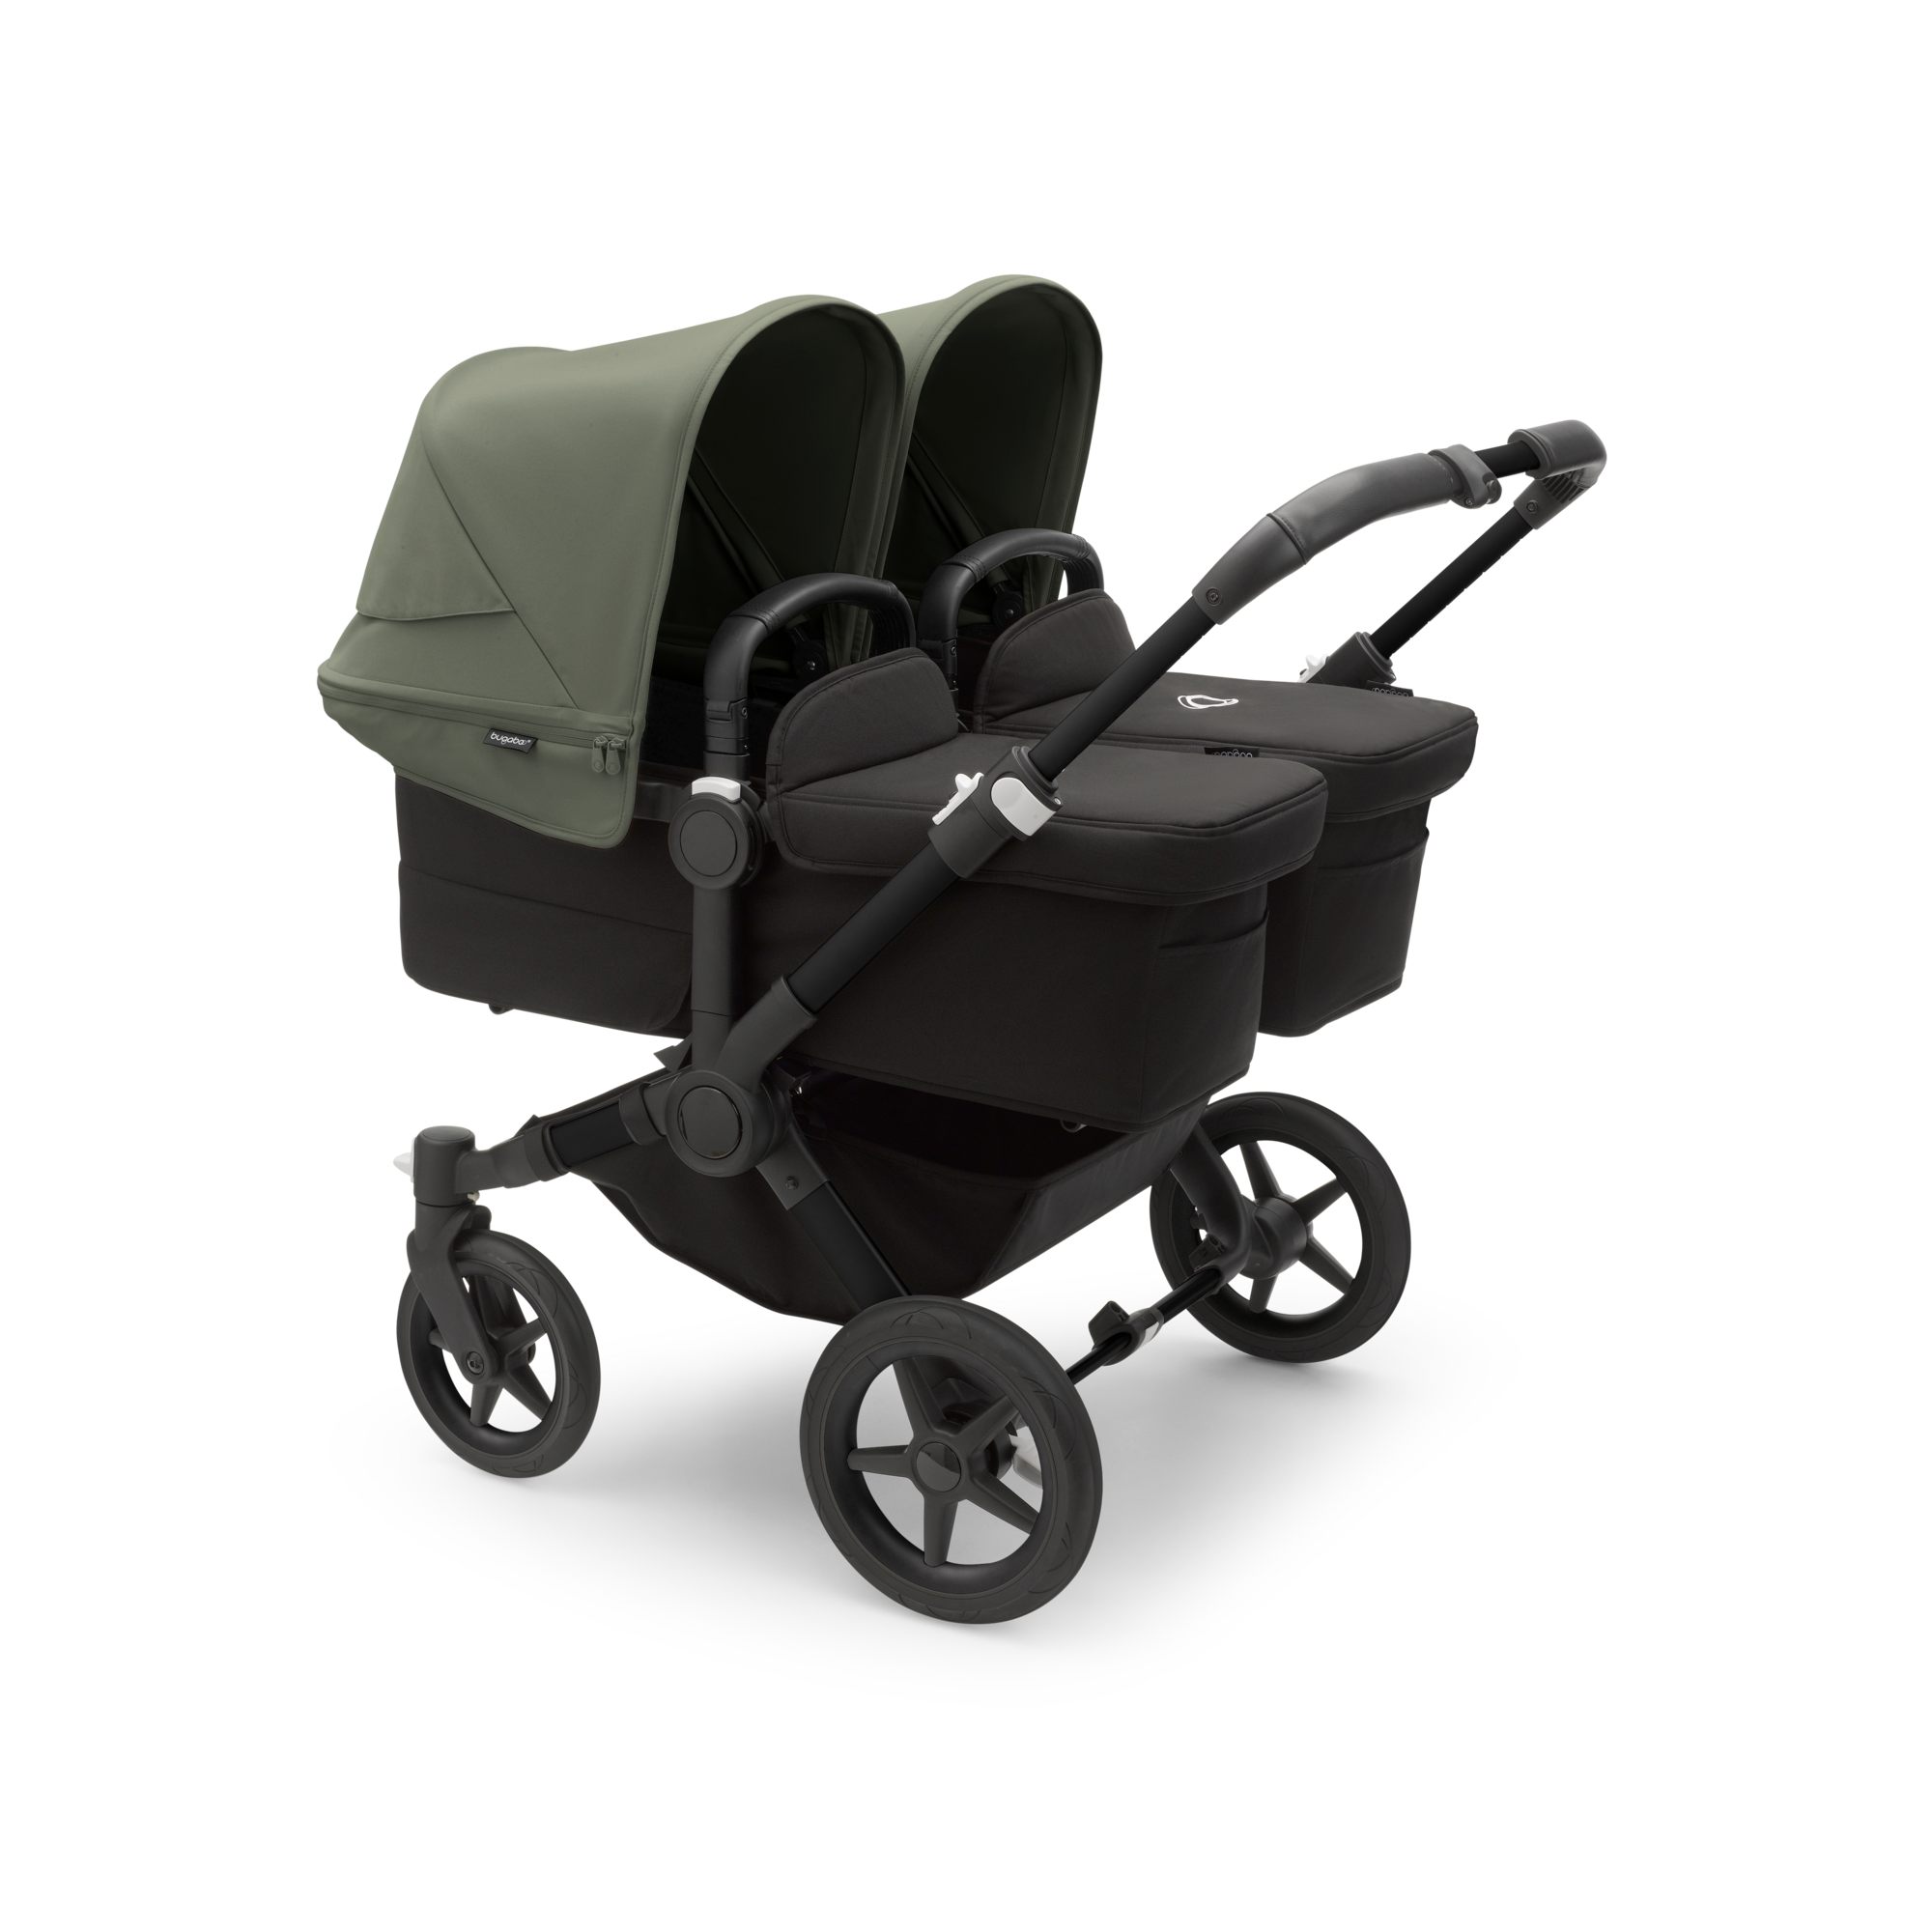 Bugaboo Donkey 5 Twin bassinet and seat stroller black base midnight black fabrics forest green sun canopy